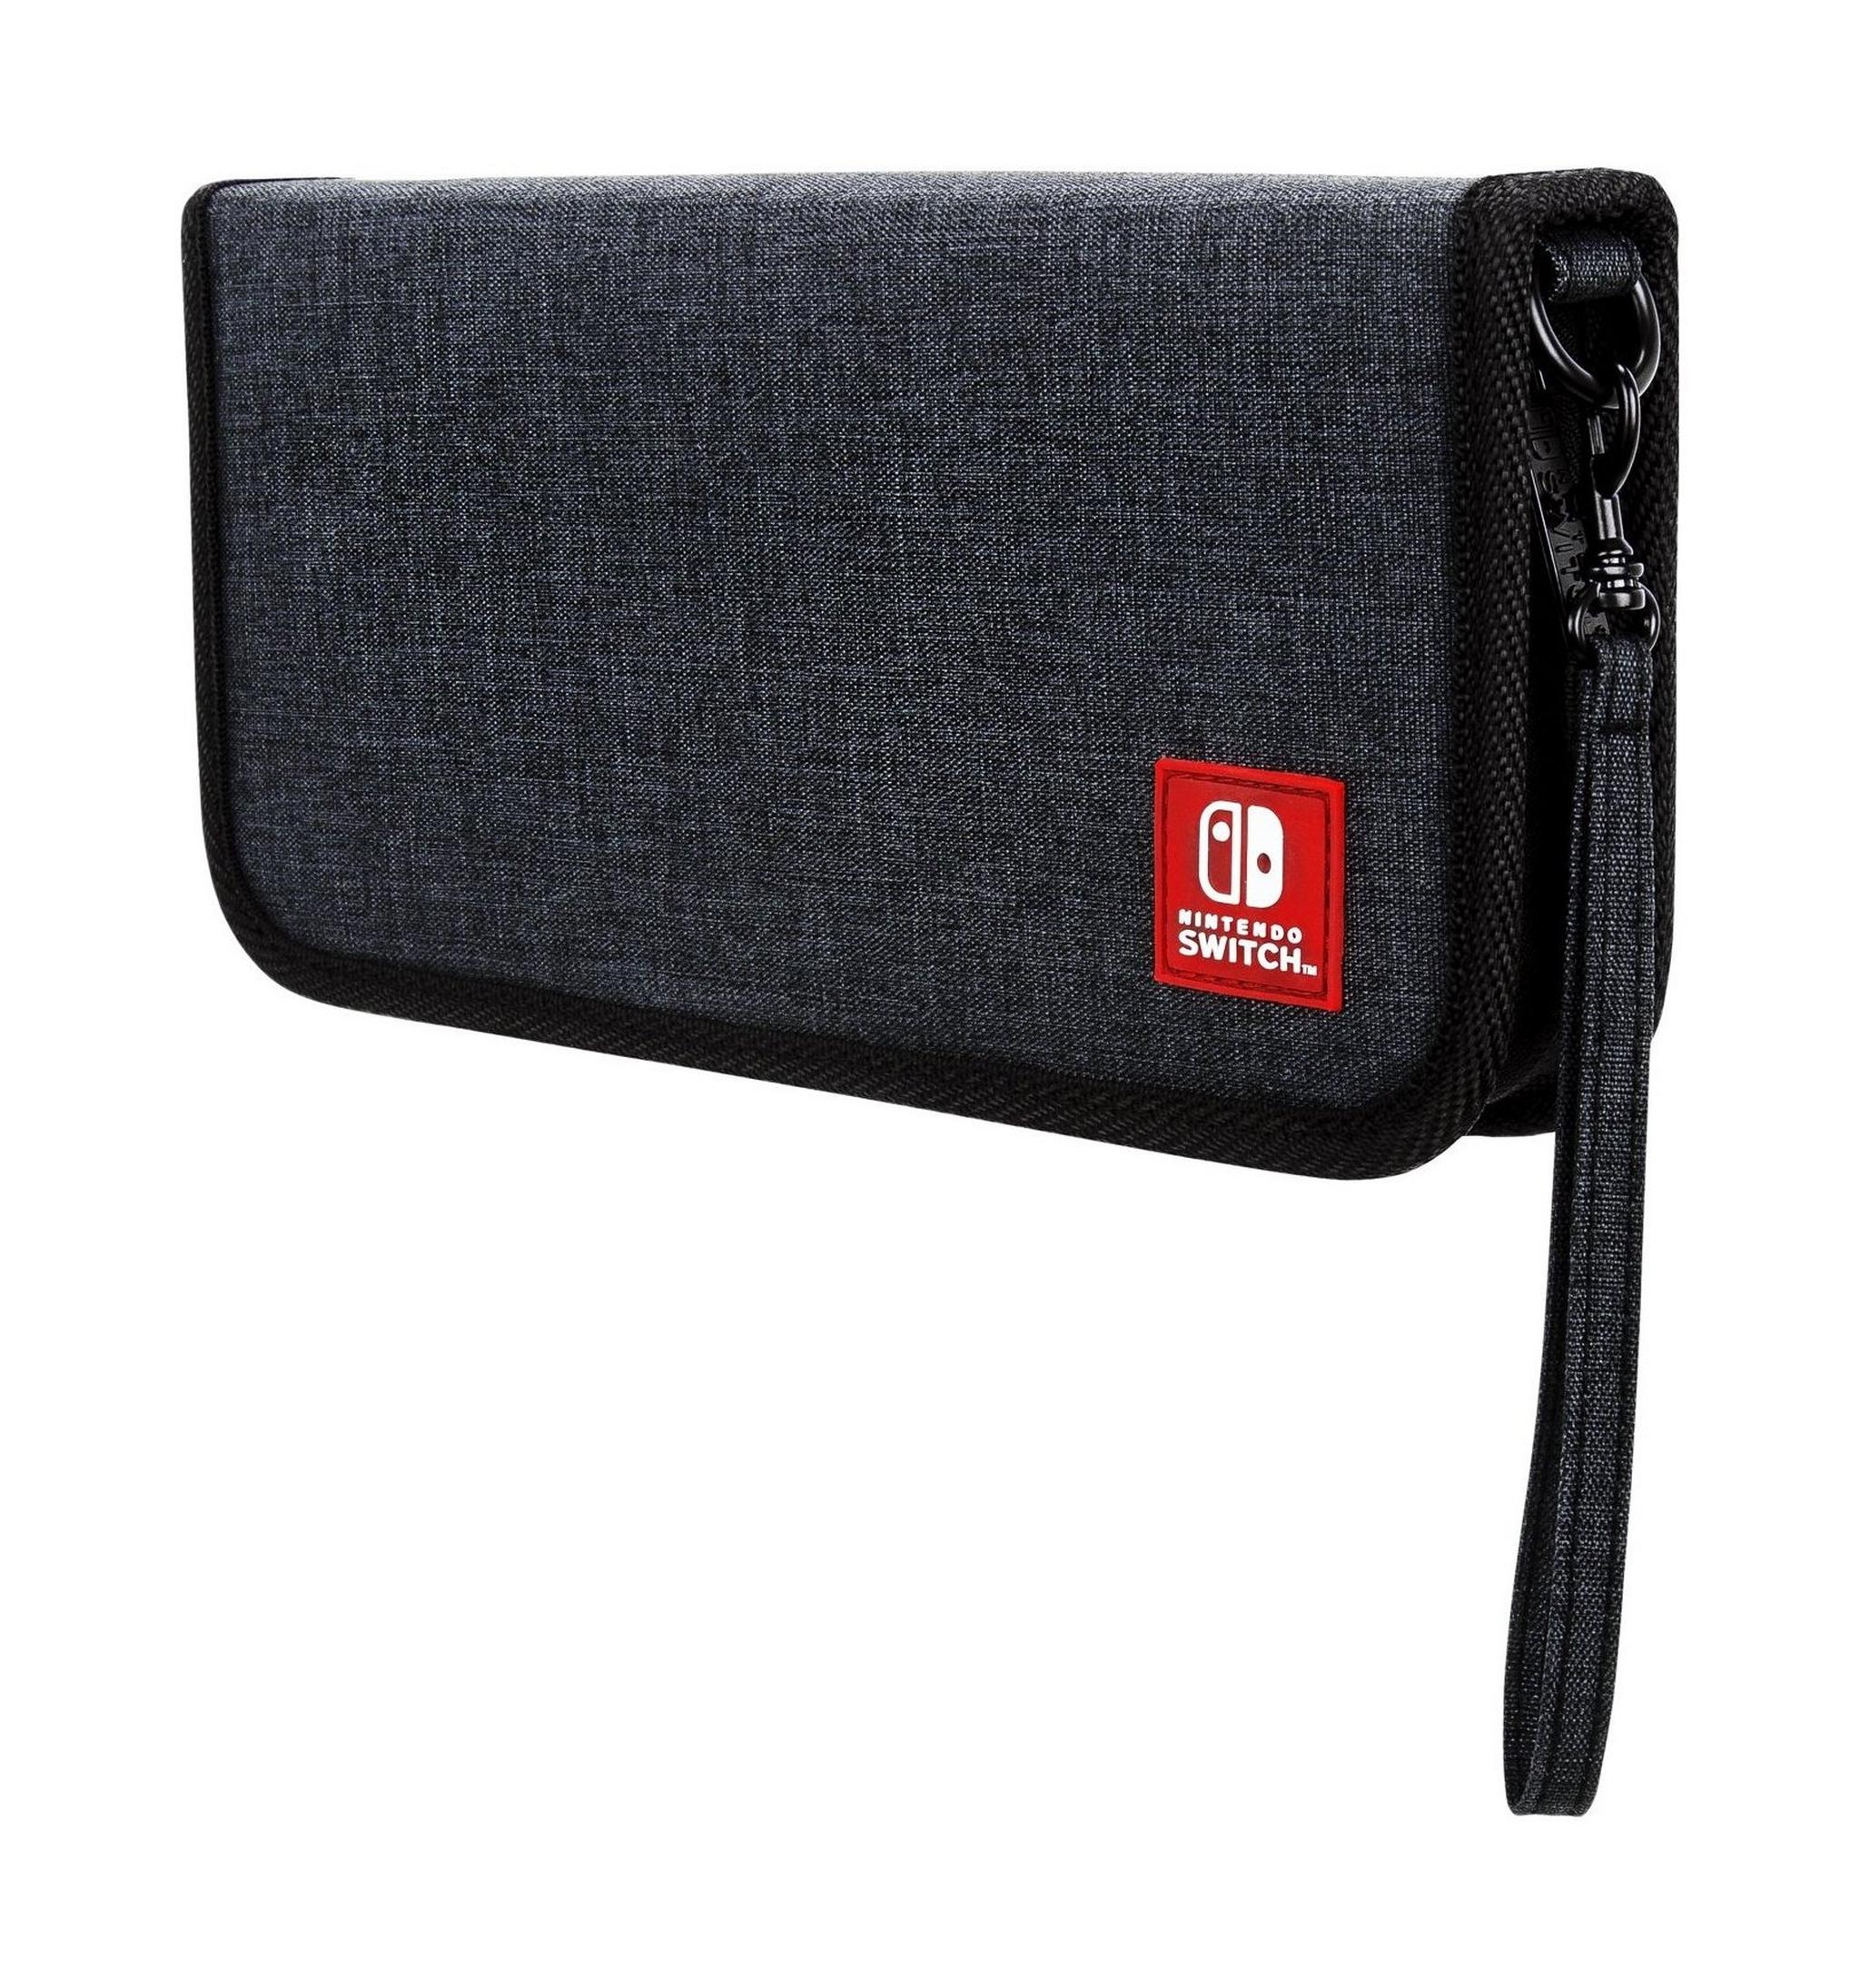 PDP Nintendo Switch Premium Travel Case - Grey